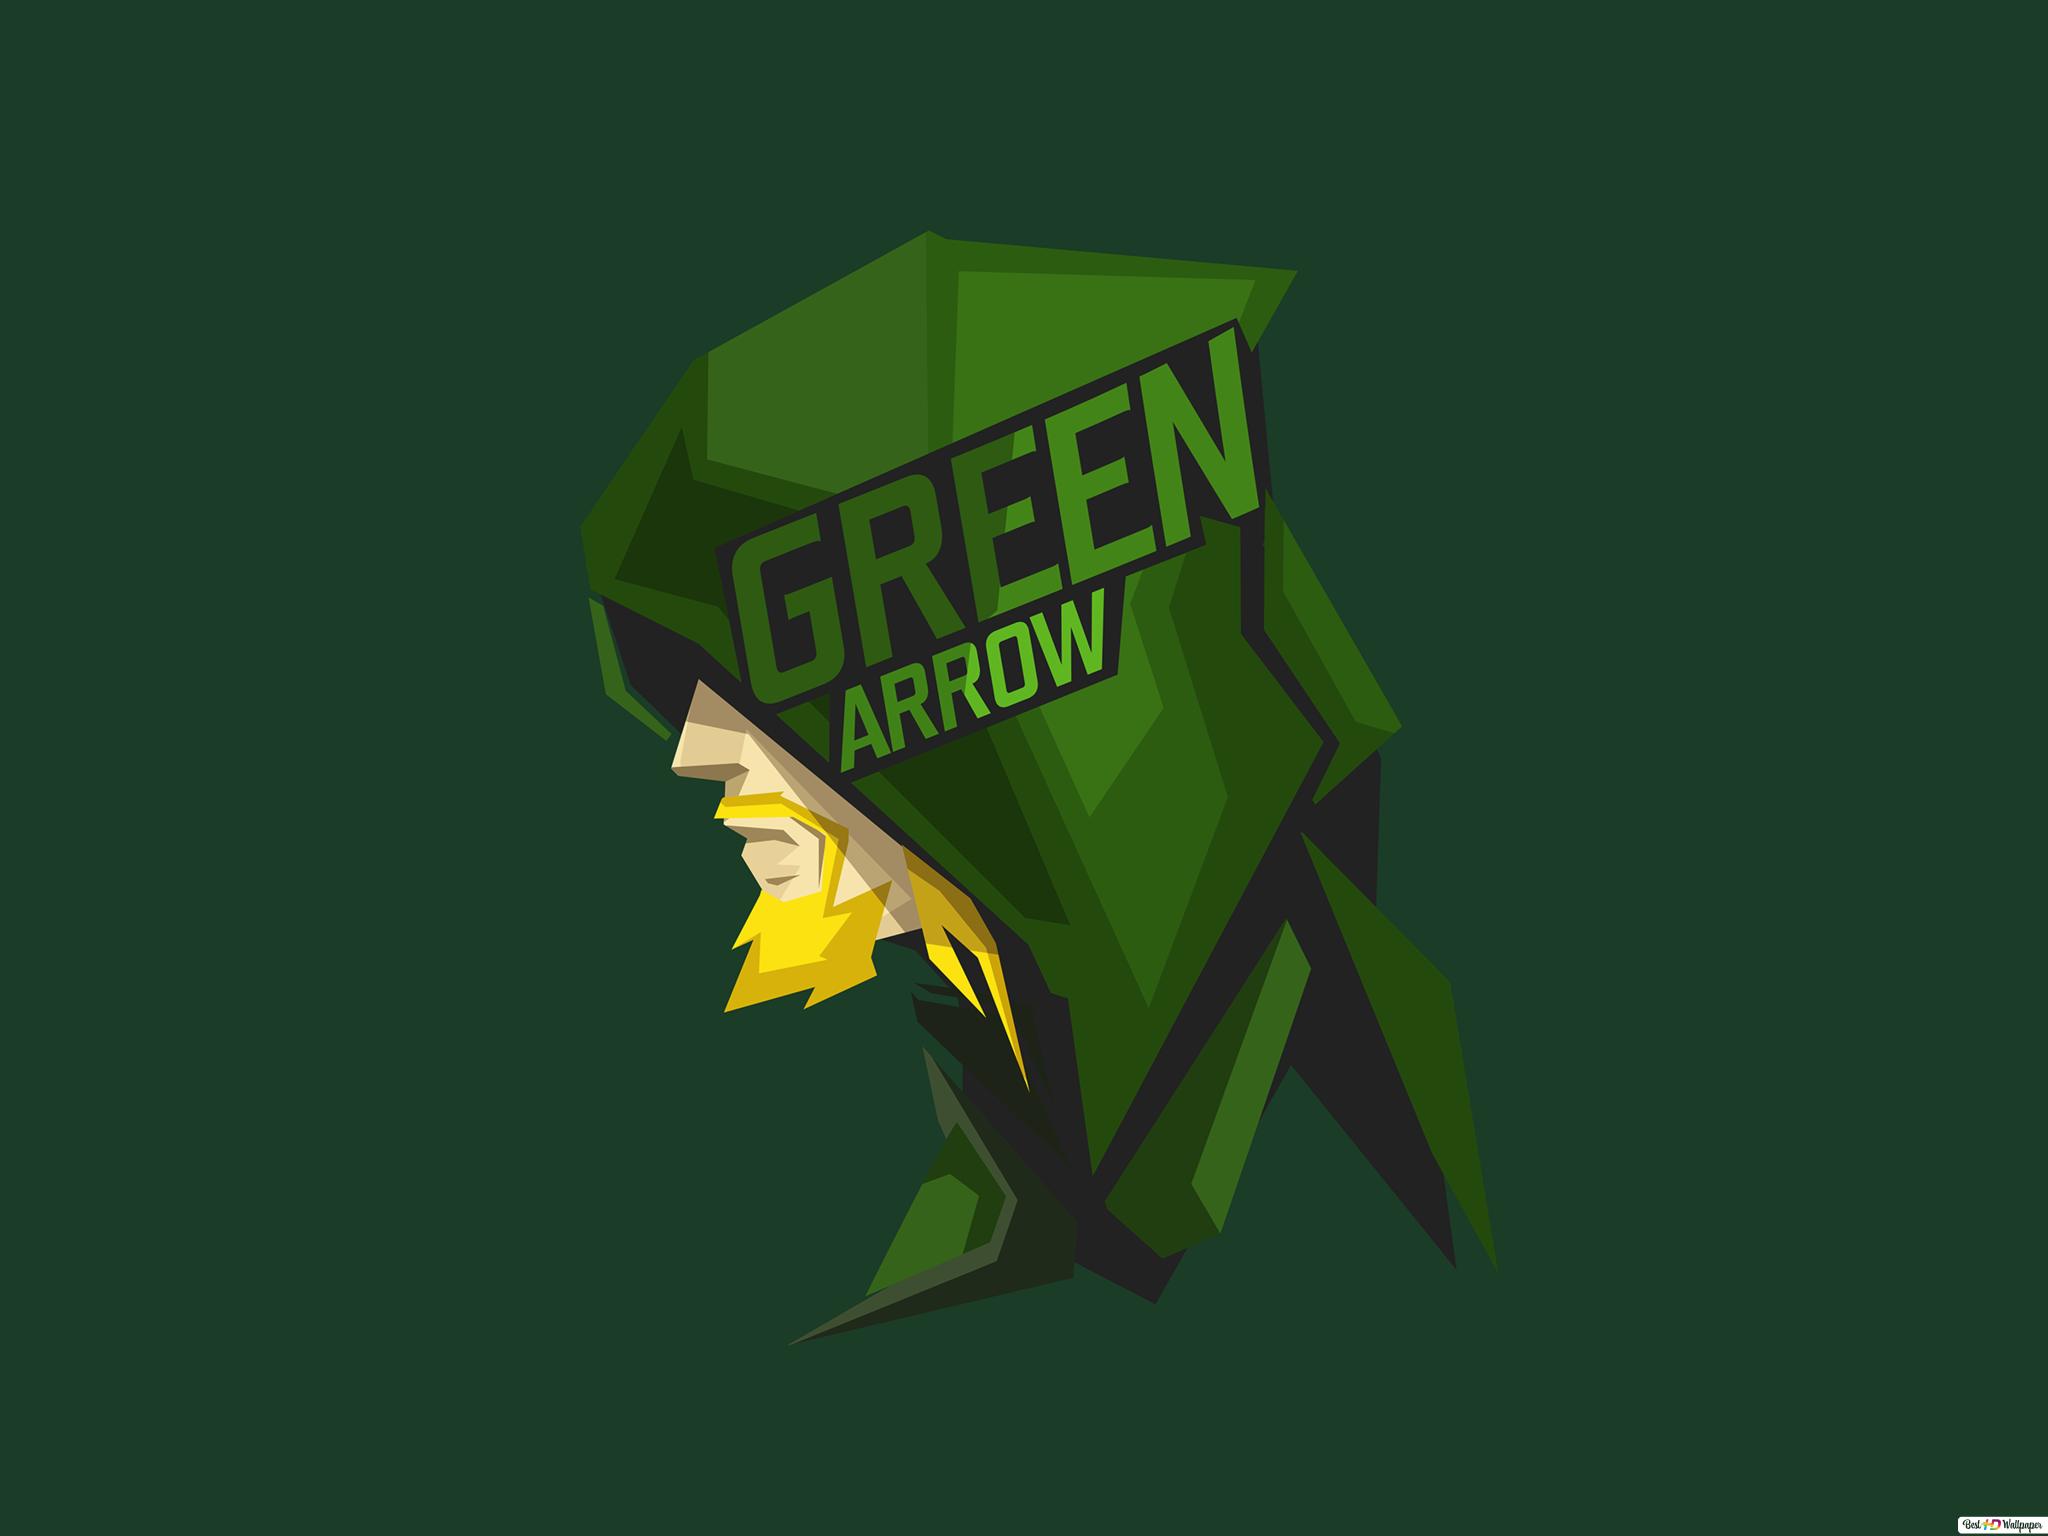 DC Comics Green Arrow in green wallpaper minimalist HD wallpaper download